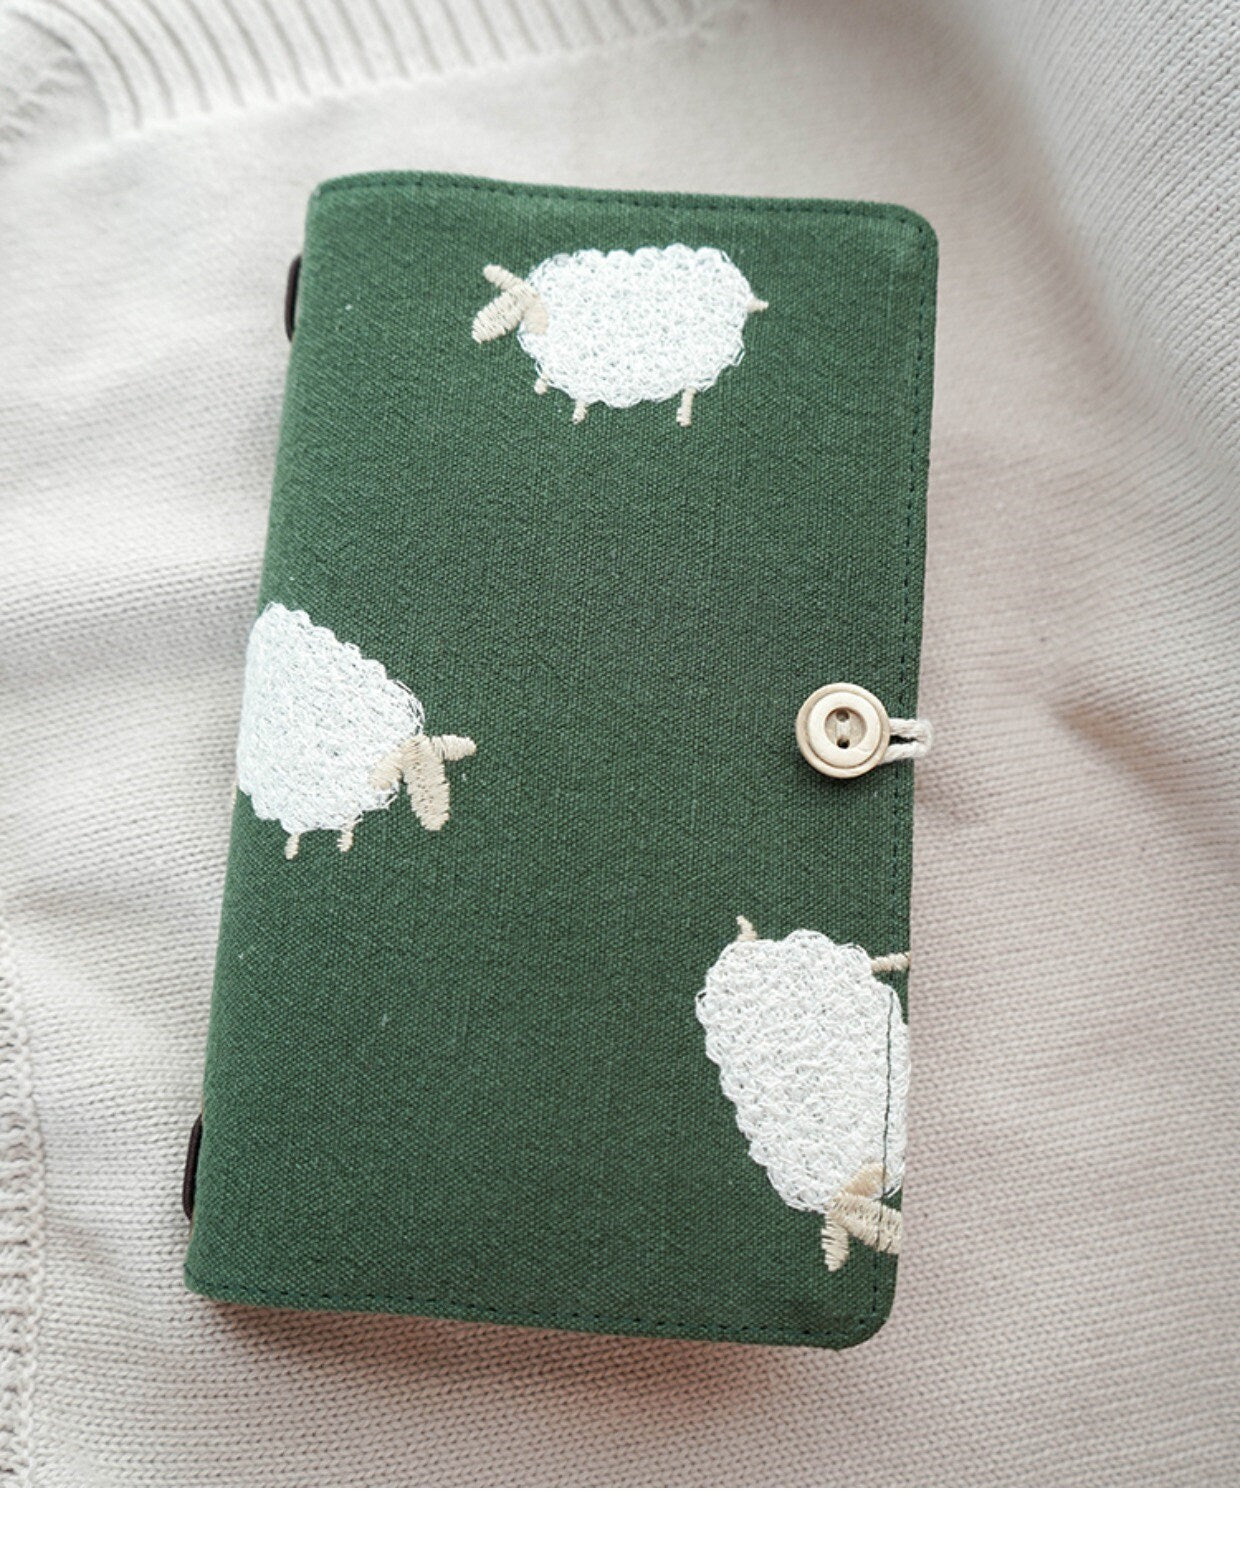 Dark Green Fabric TN Notebook Embroidered lamb Journal Refilled Handmade Planner Standard Portable Dairy Book Traveler's TN Book Worth Gift